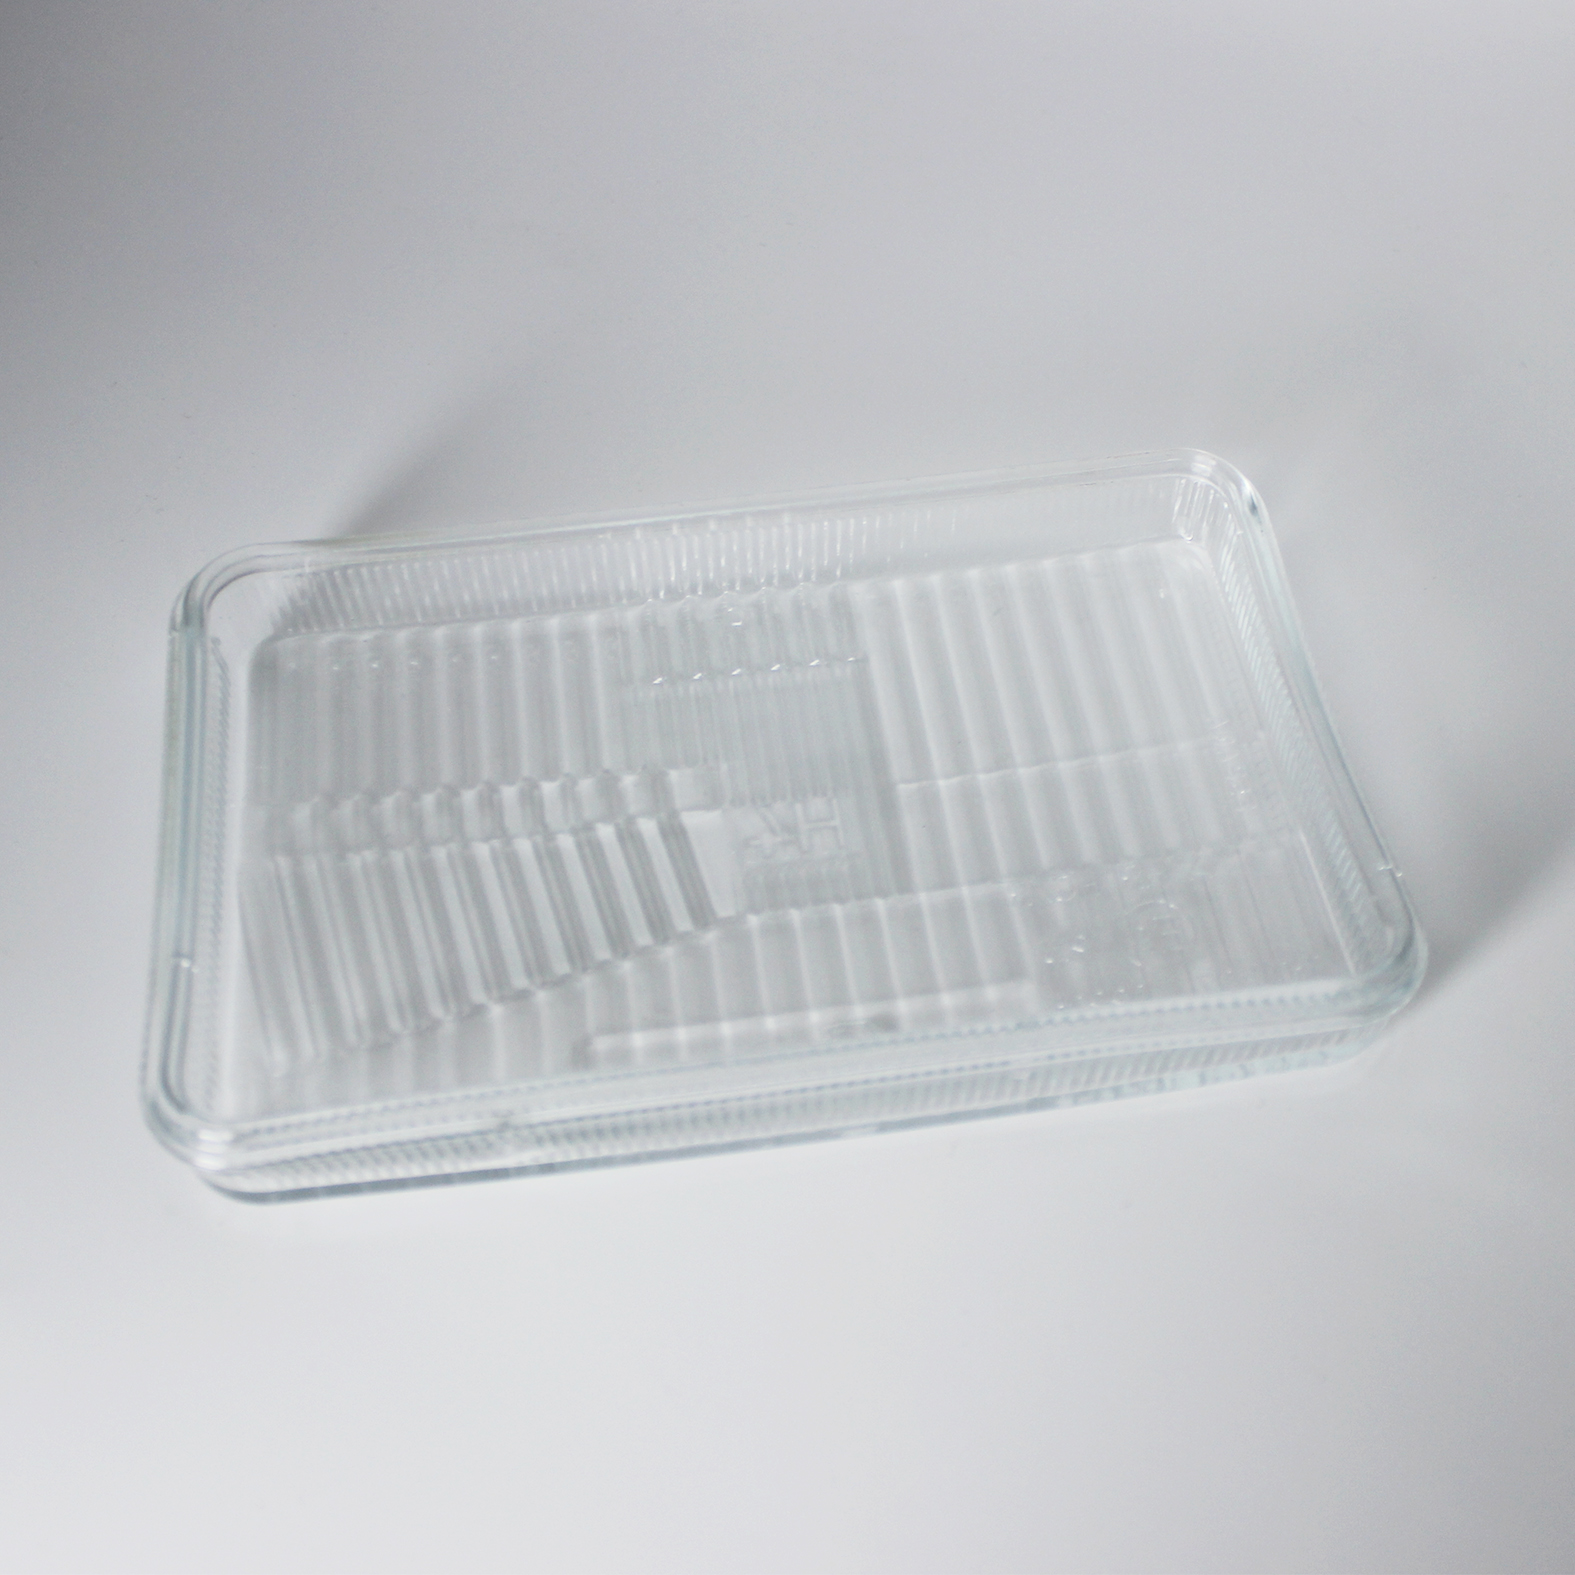 Changchun Supplier Customized Transparent Glass Automotive Light Cover